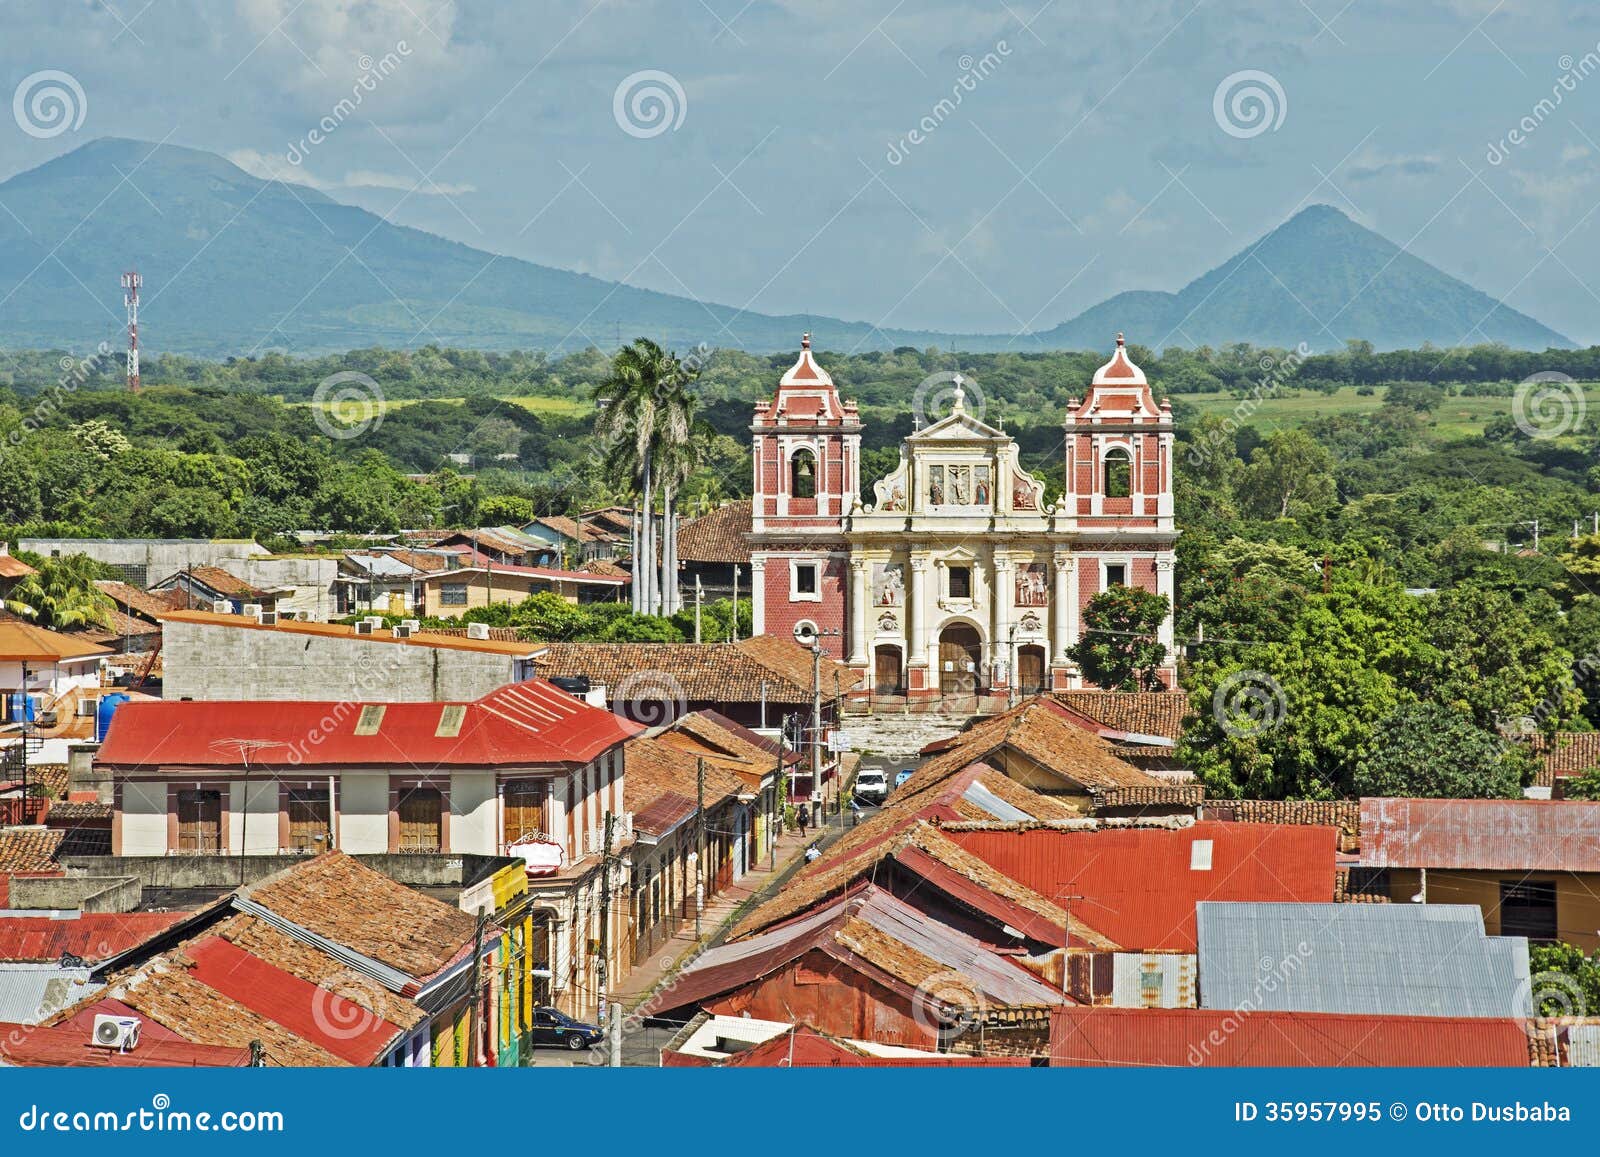 el calvario church in leon, nicaragua